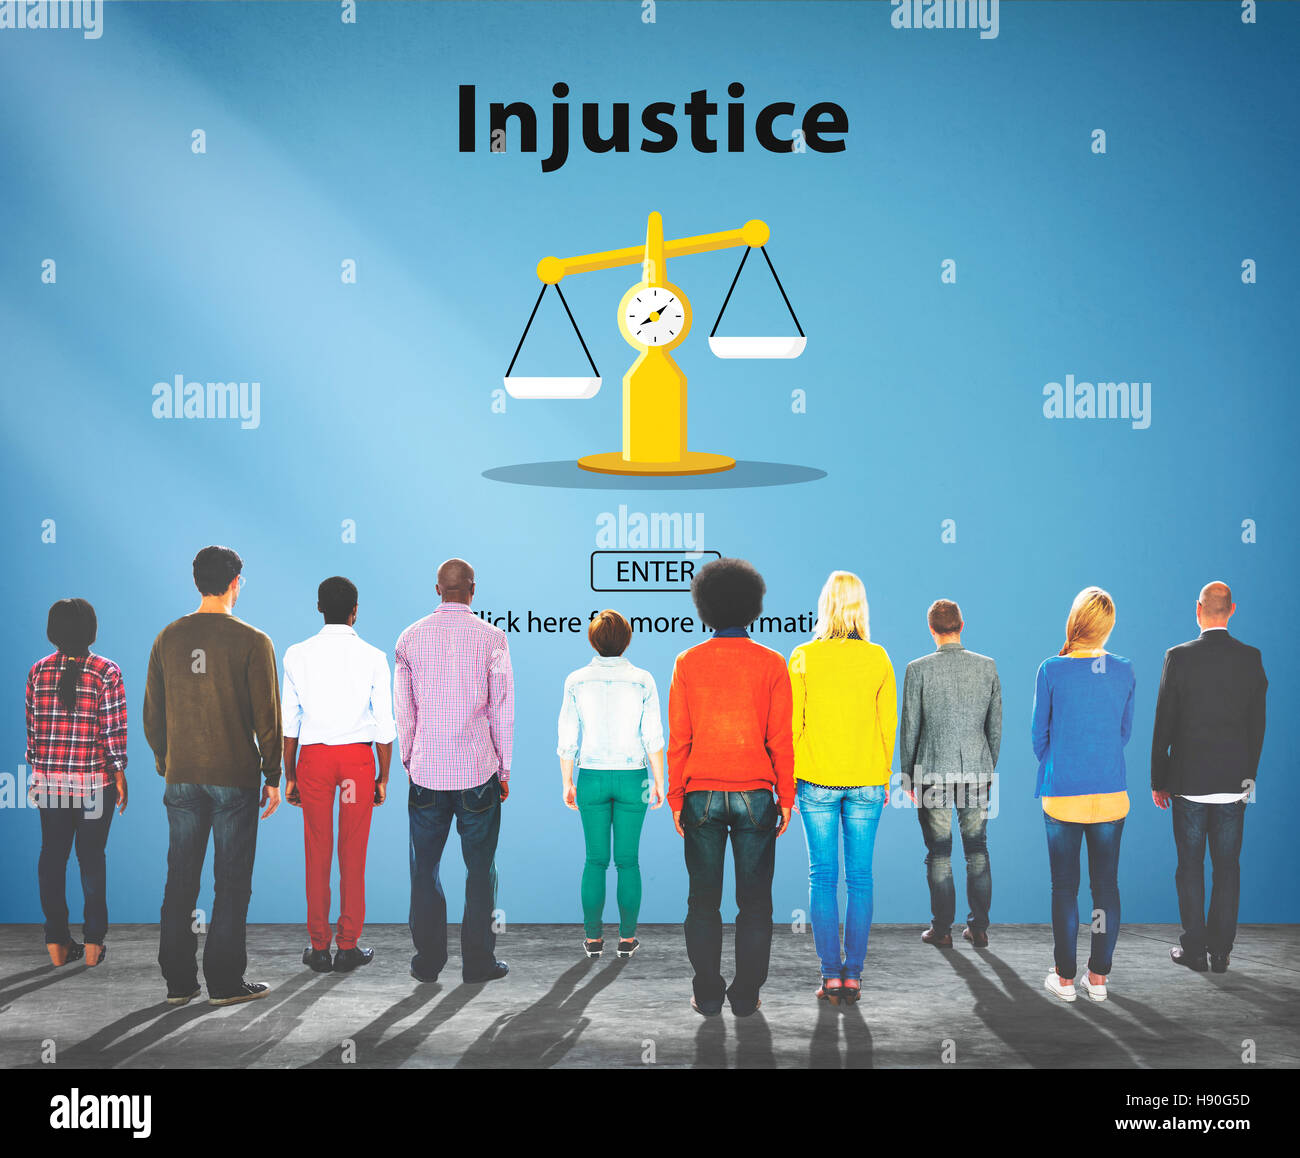 Injustice injustice rébellion Conflits Concept antagonisme Banque D'Images